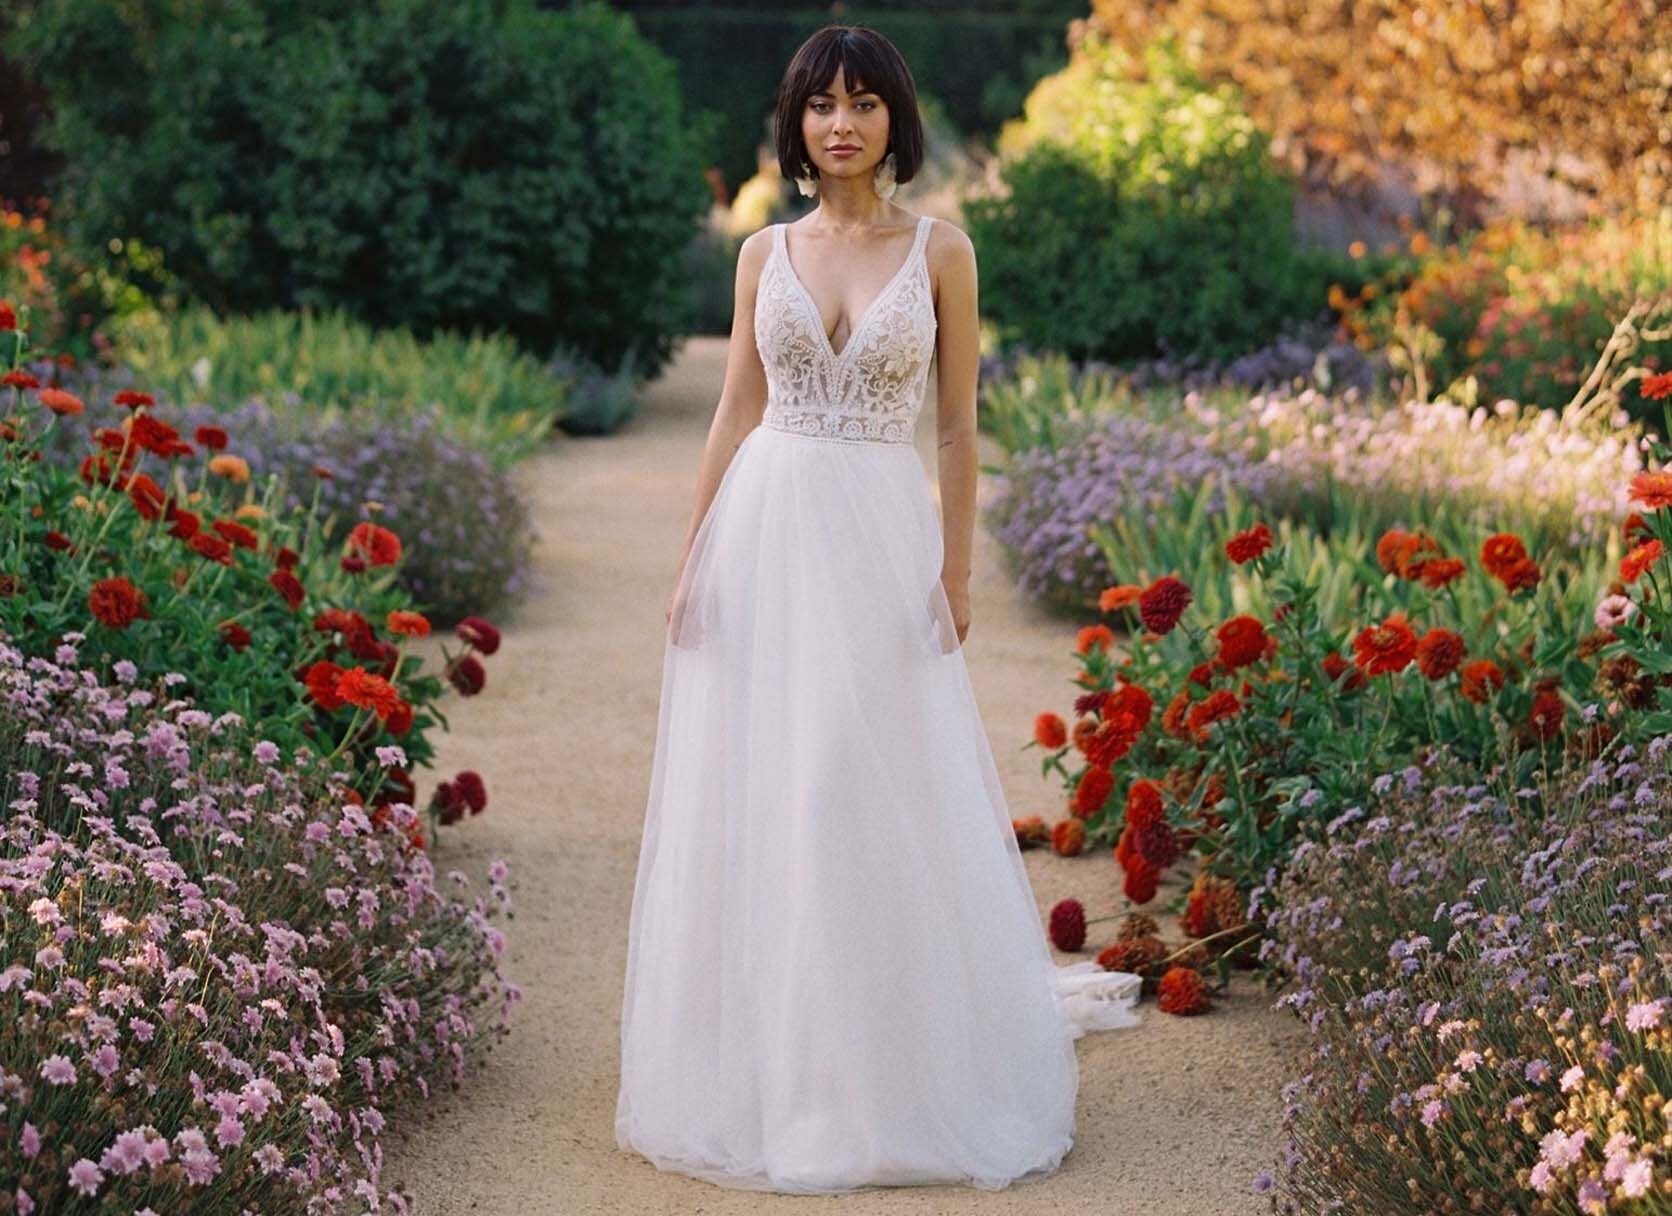 Model wearing a white Halter Style Wedding Dress